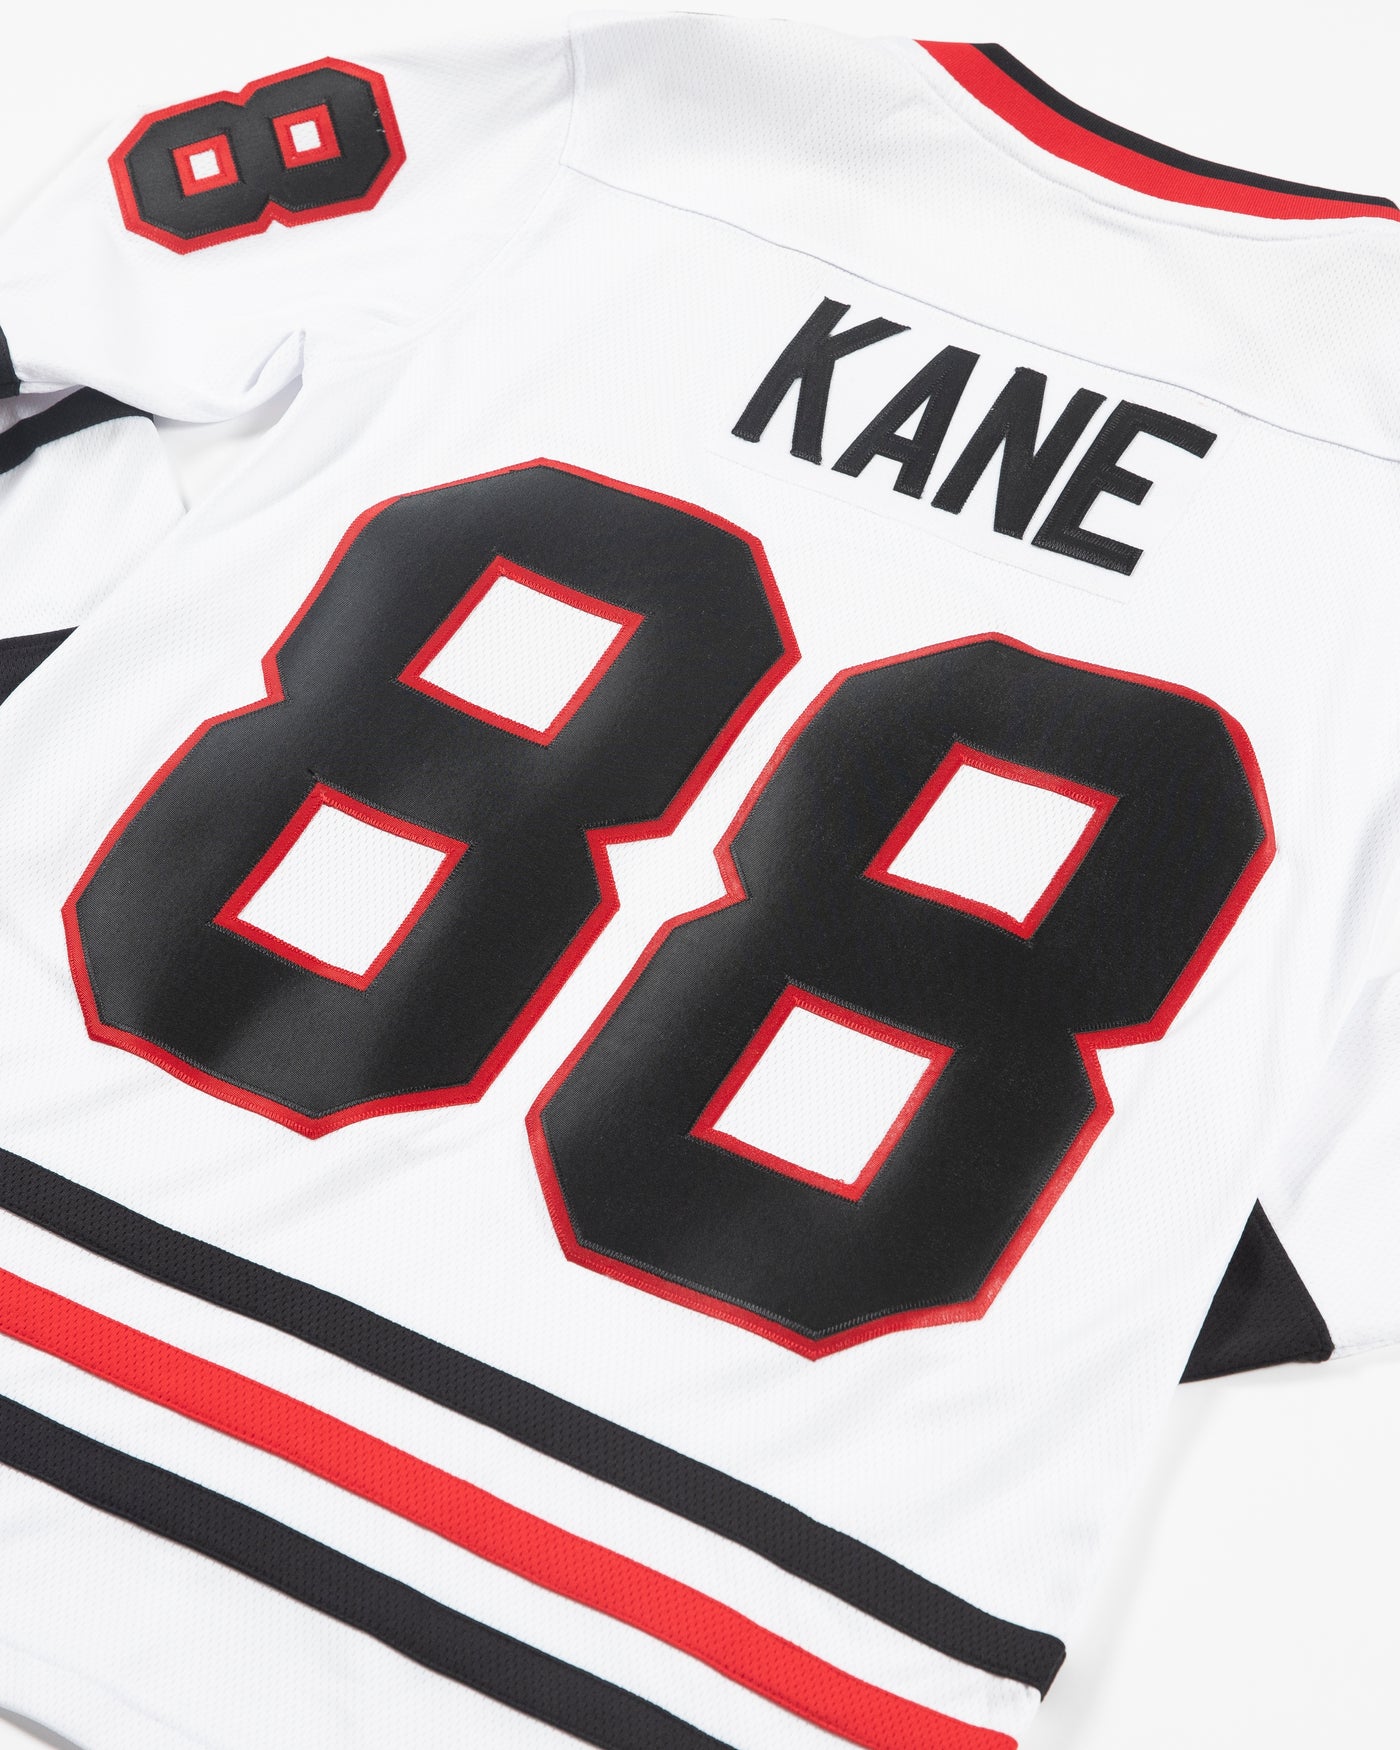 Women's Fanatics Branded Patrick Kane Black Chicago Blackhawks